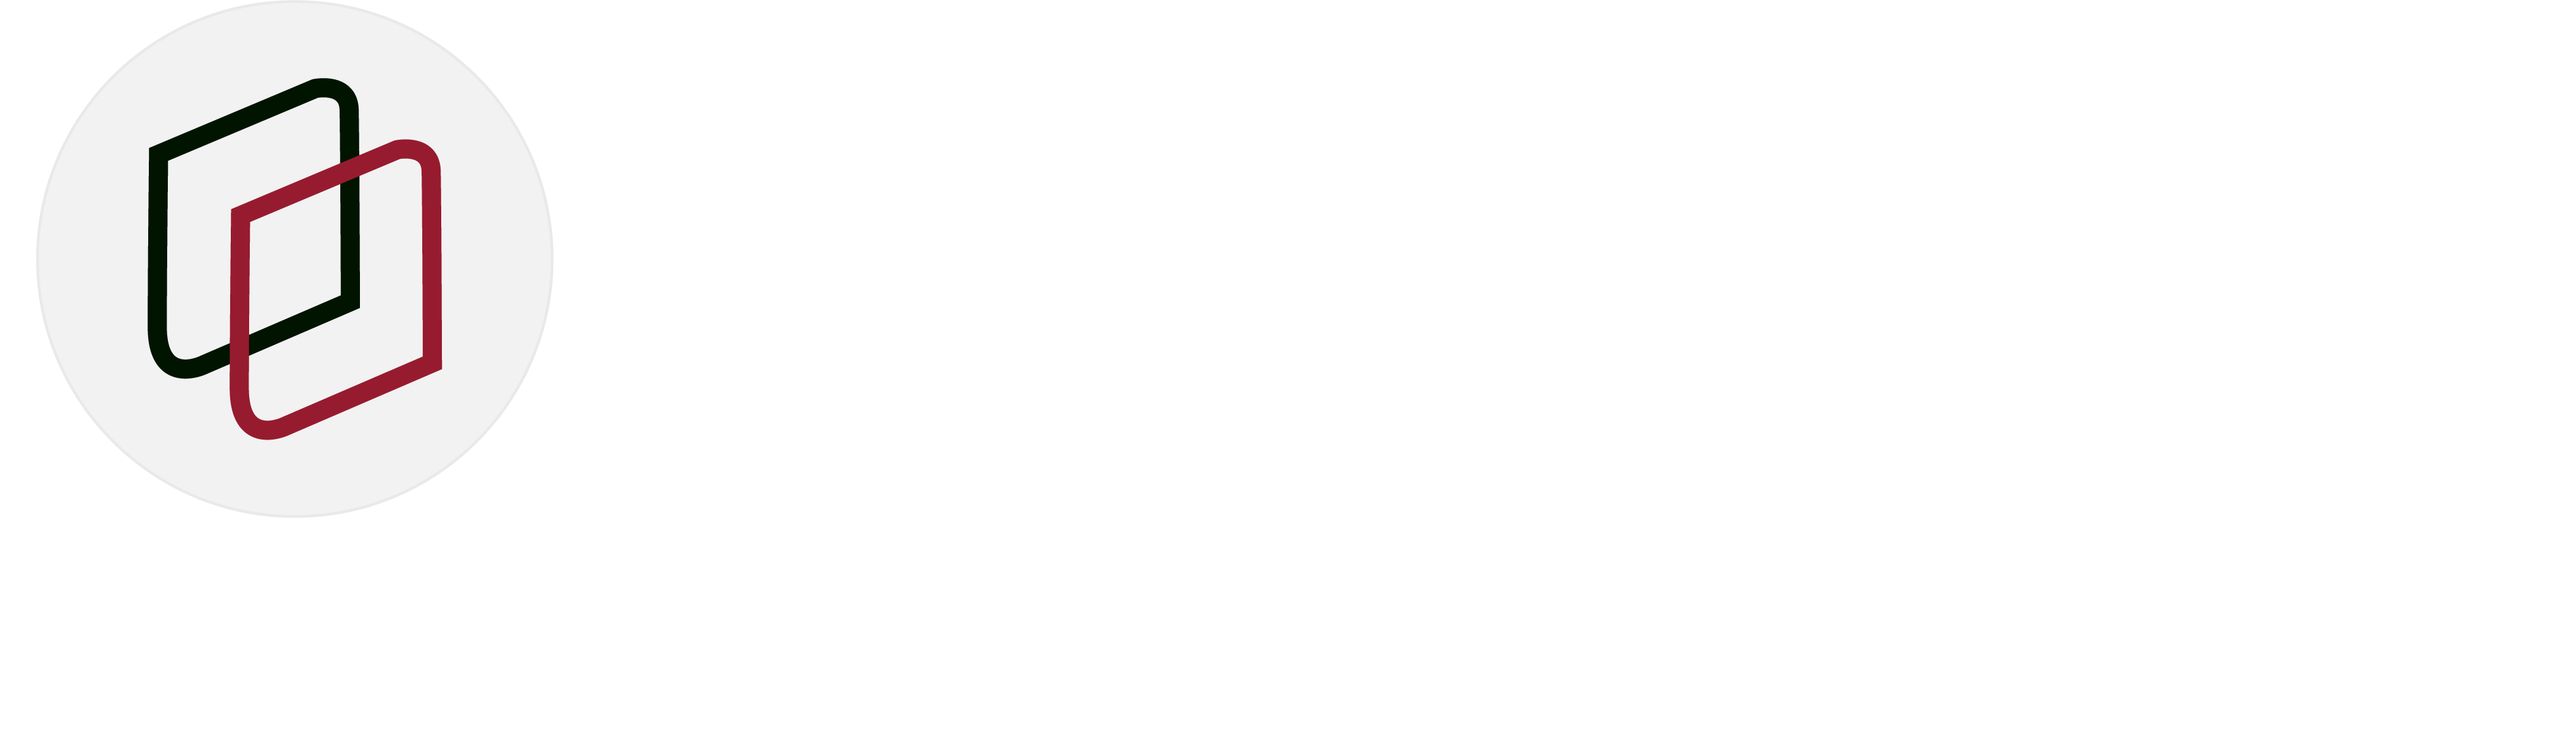 Logo_Publisher for System Architect_SodiusWillert_2020_White_vec